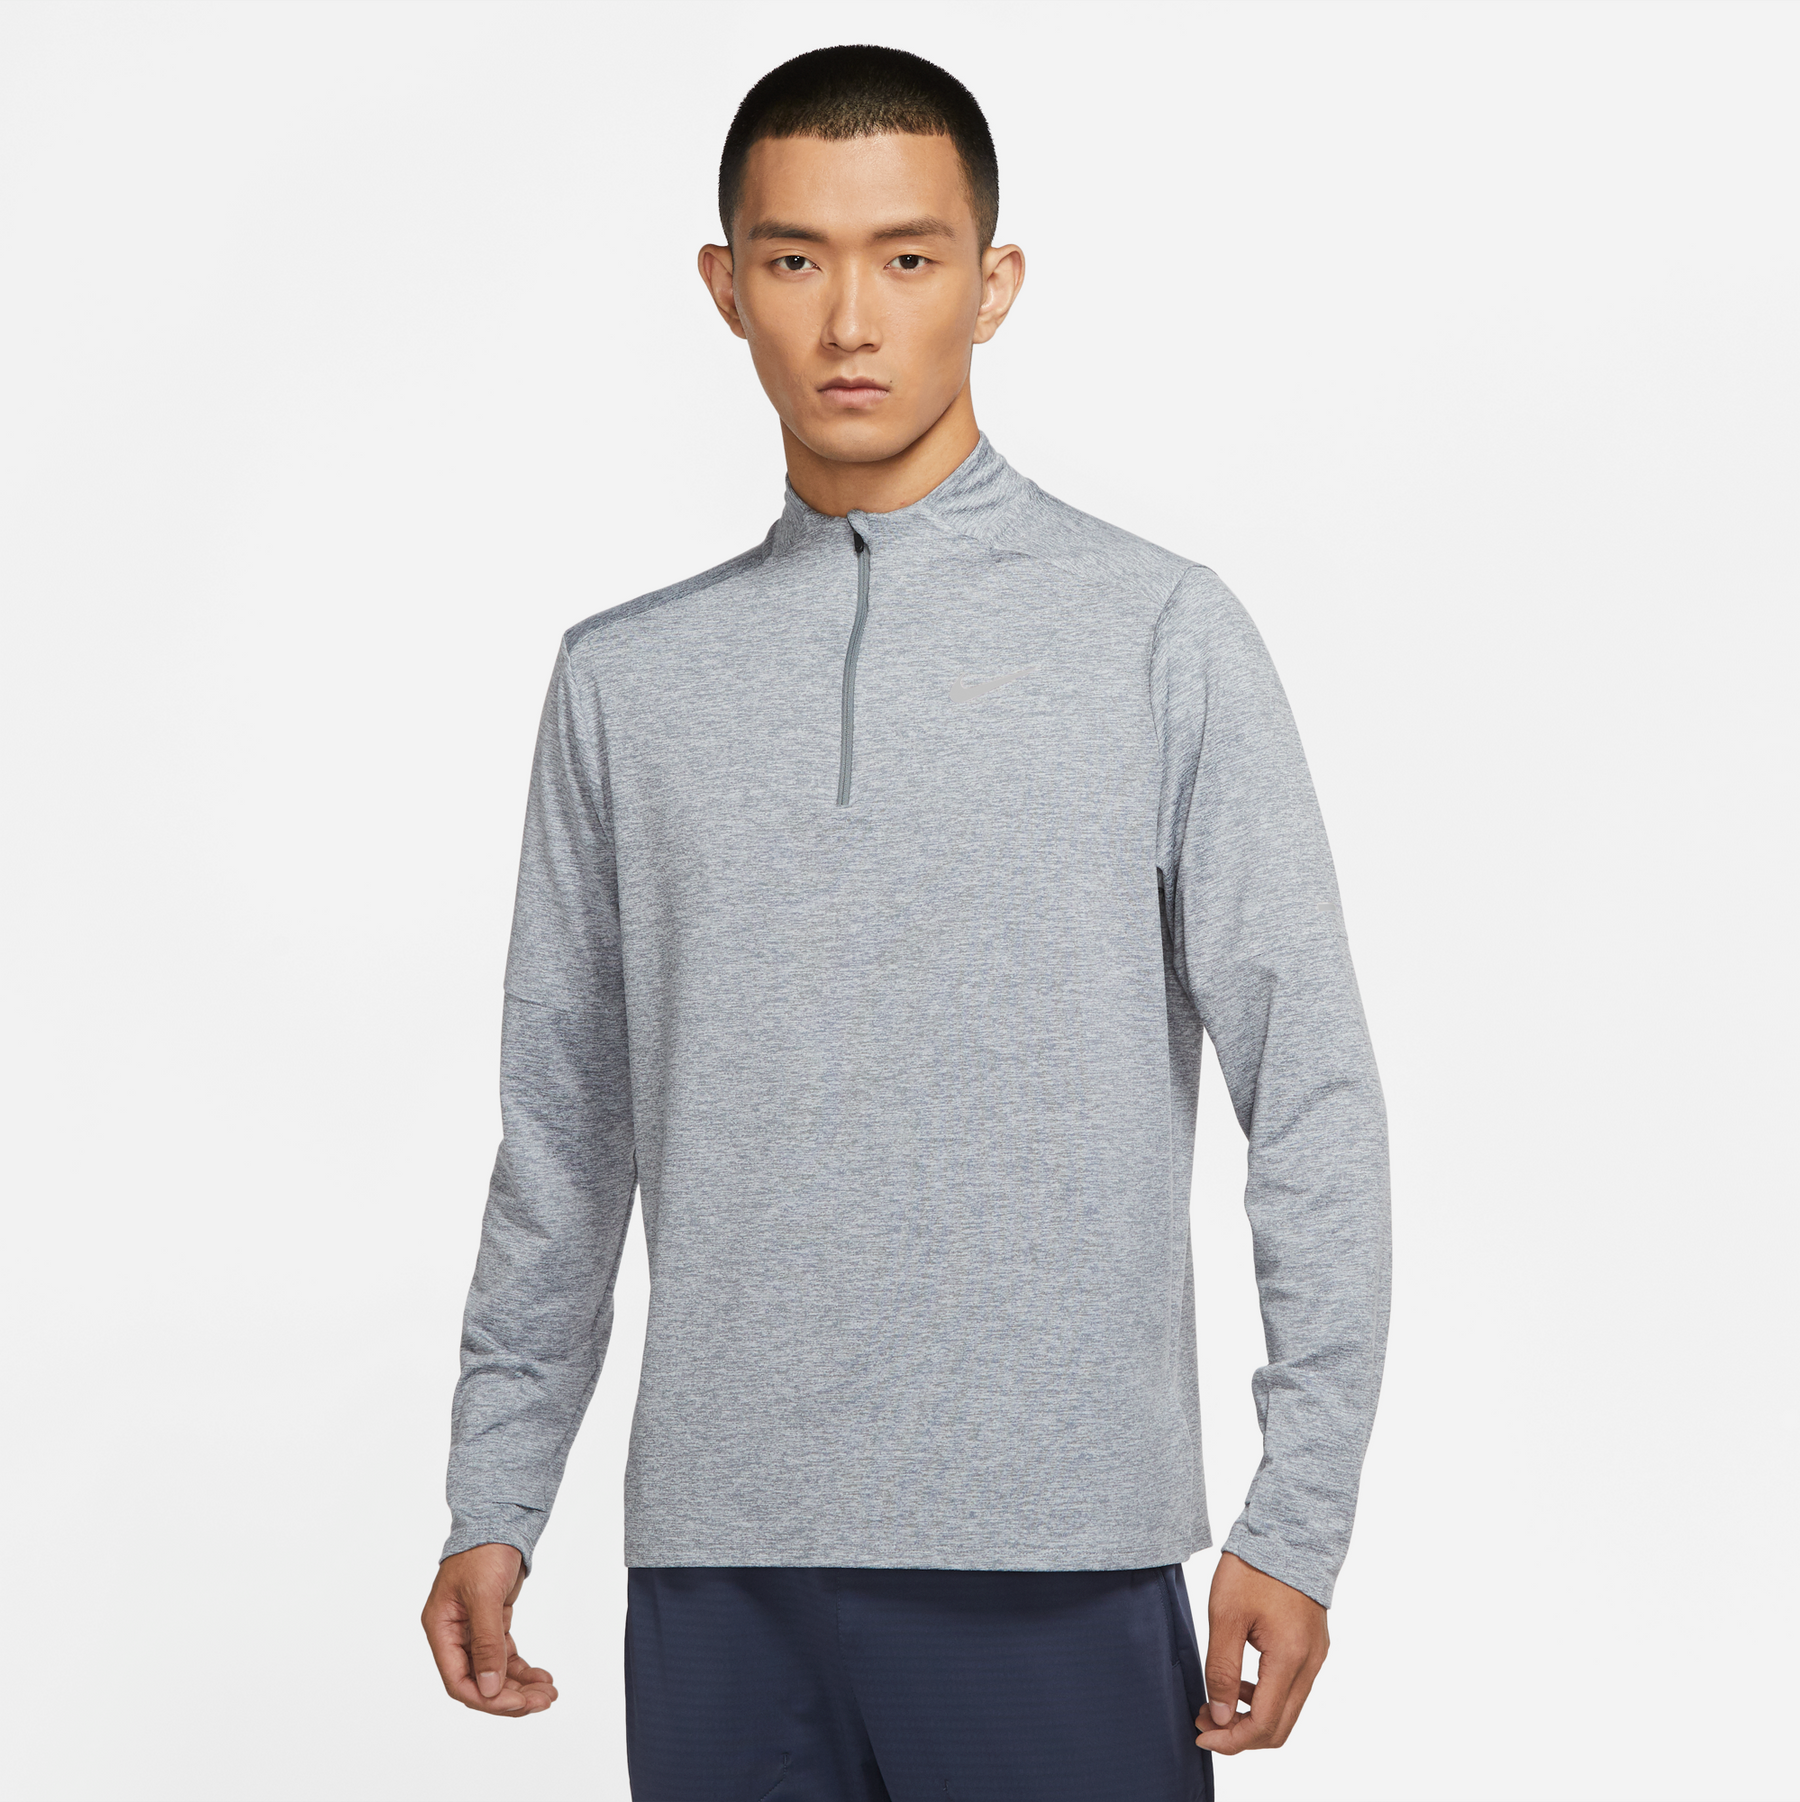 Nike Dri-FIT Track Club Men's Fleece Long-Sleeve Crew Neck Running  Sweatshirt